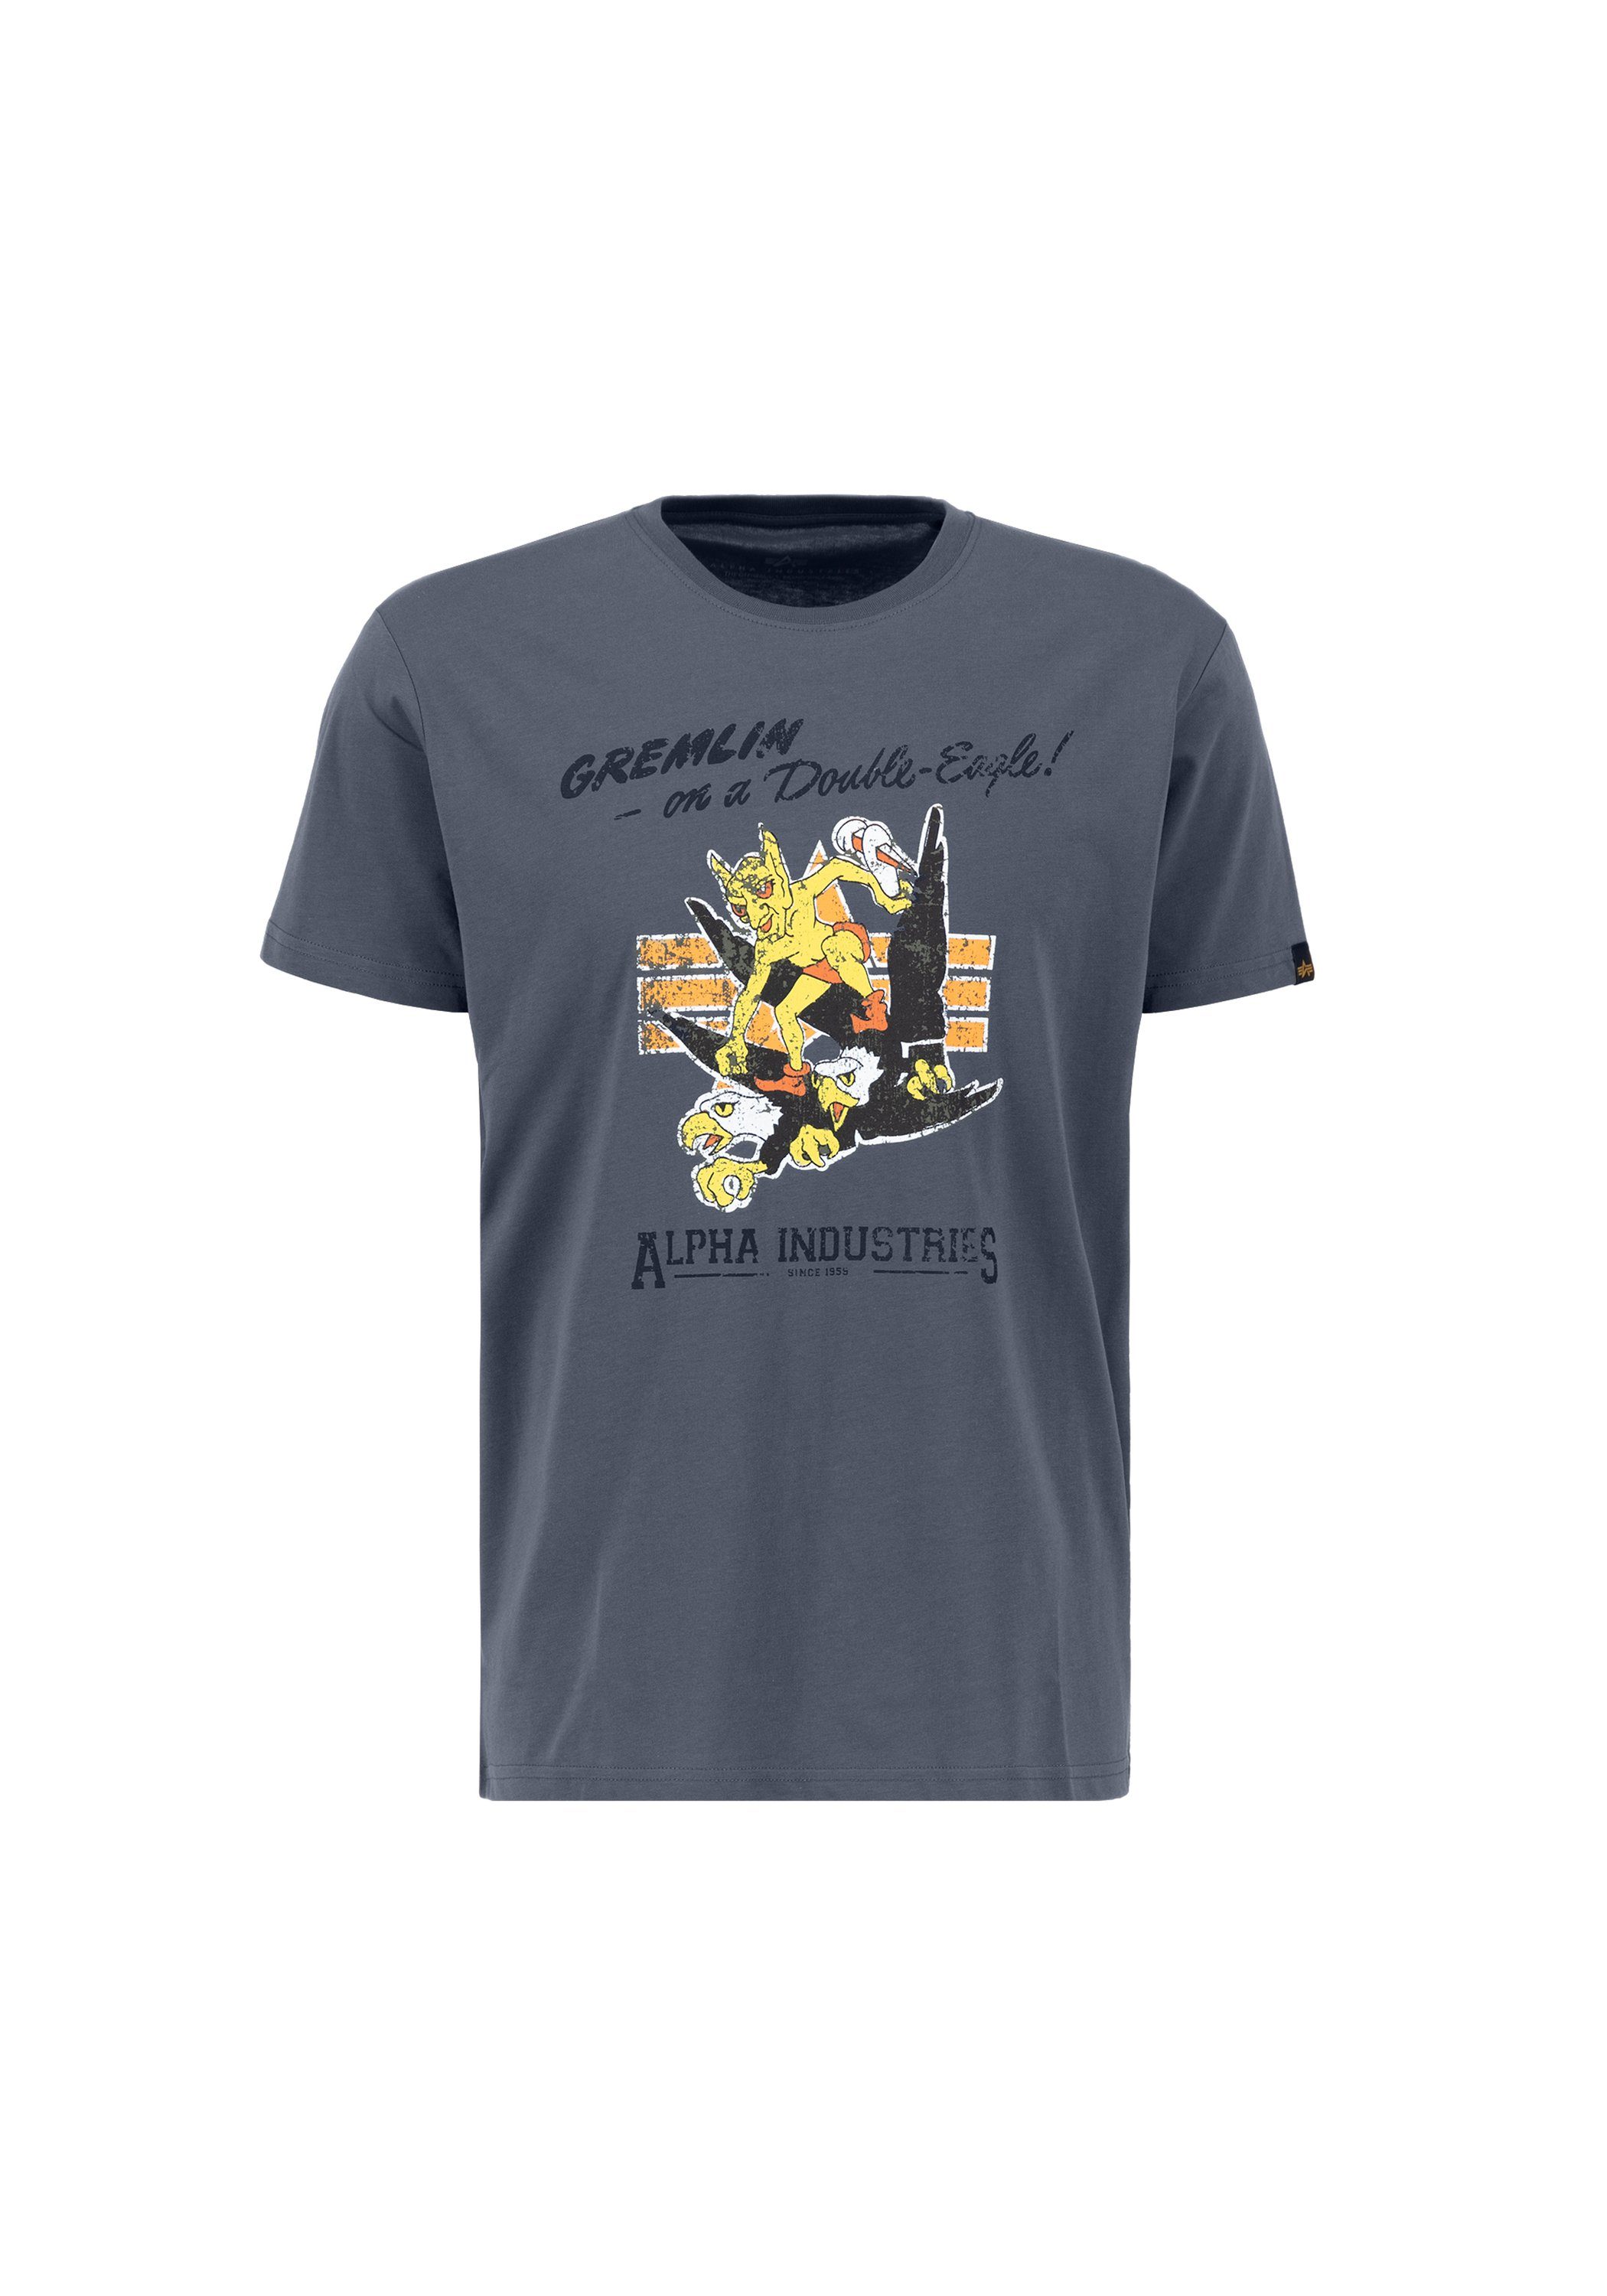 Alpha Industries T-shirt  Men - T-Shirts Gremlin T